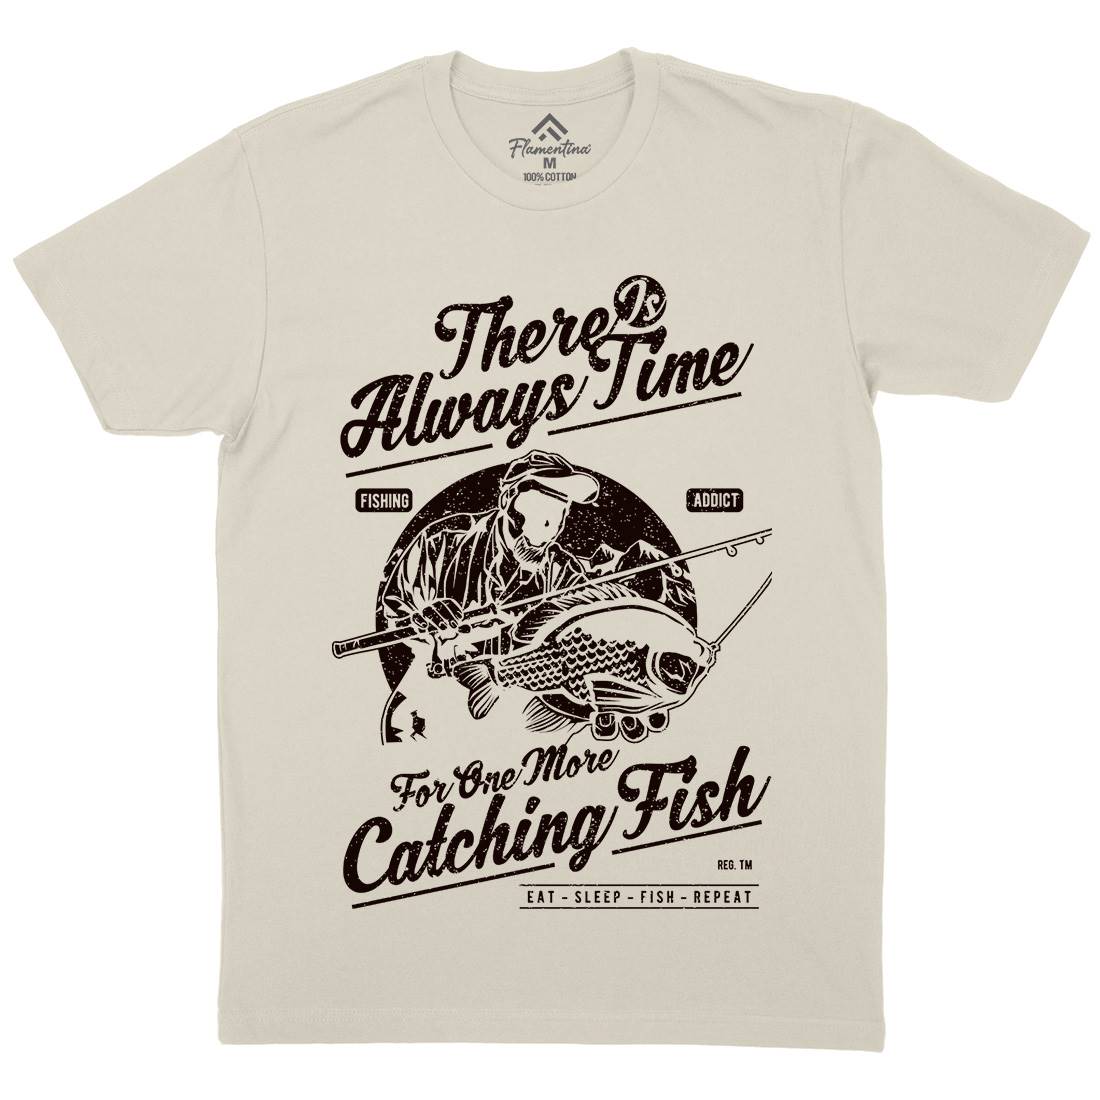 One More Catching Mens Organic Crew Neck T-Shirt Fishing A731